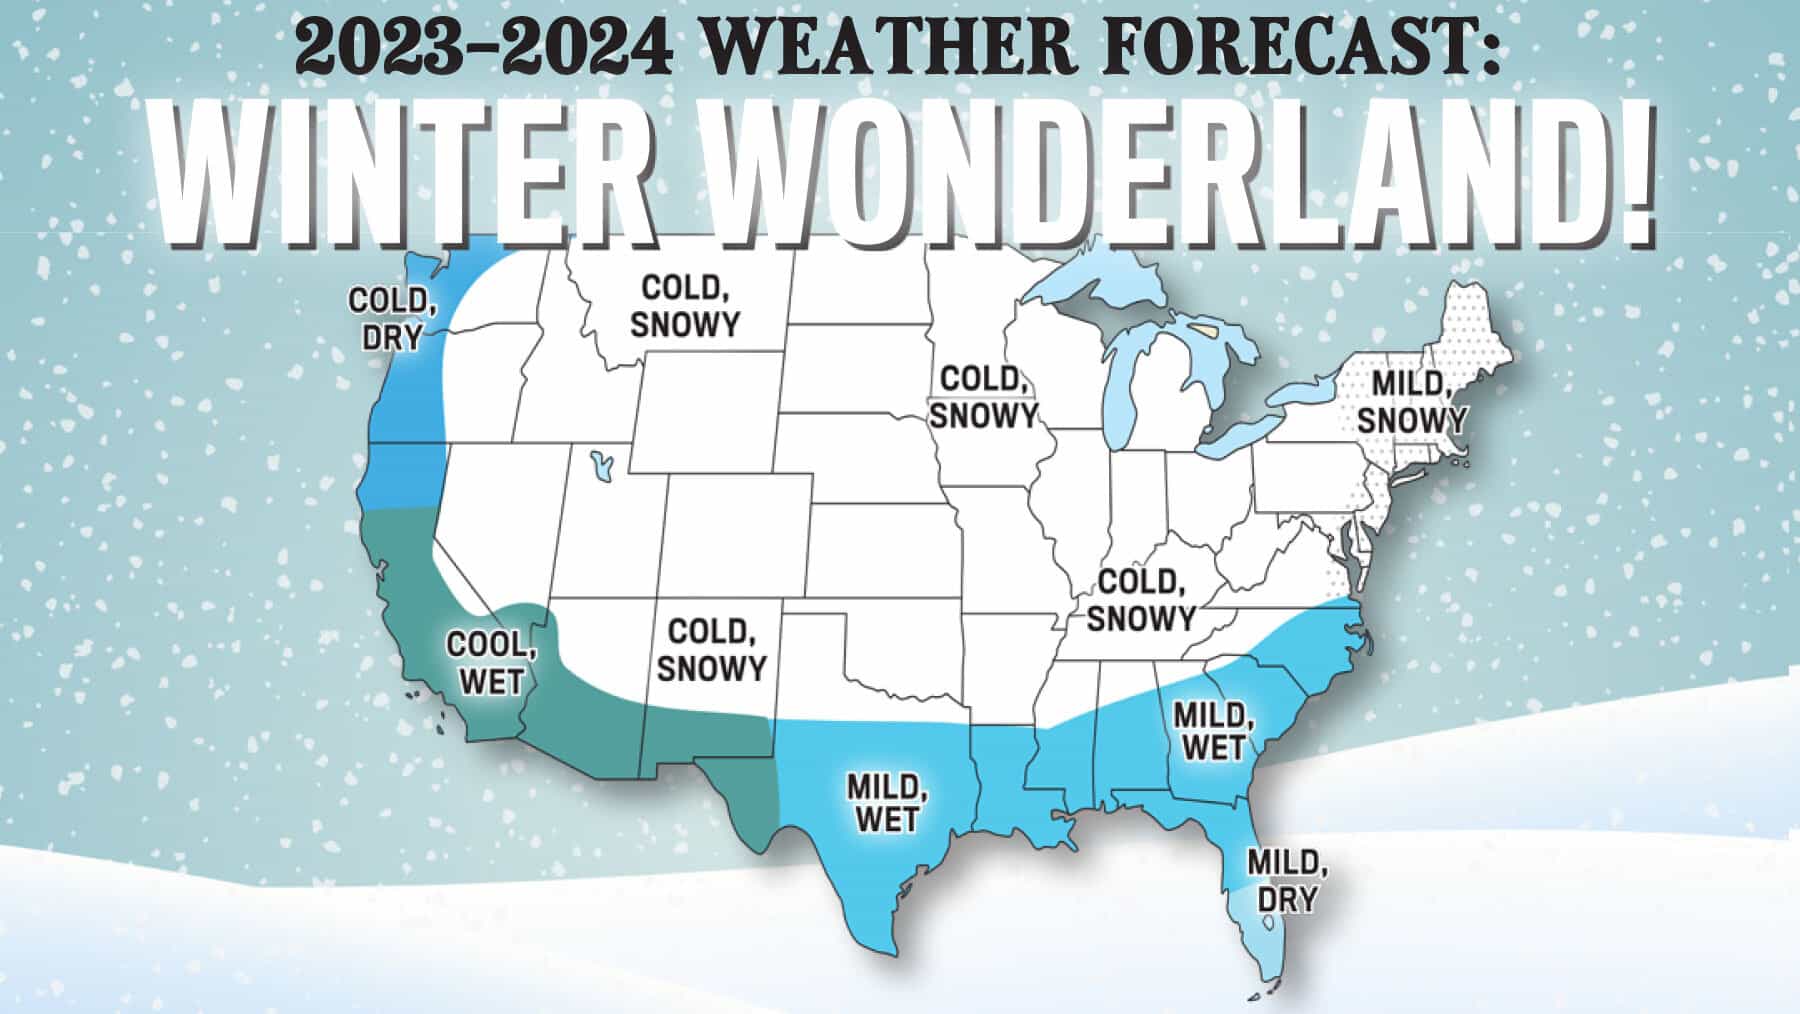 Old Farmer's Almanac Winter Forecast 2023/24